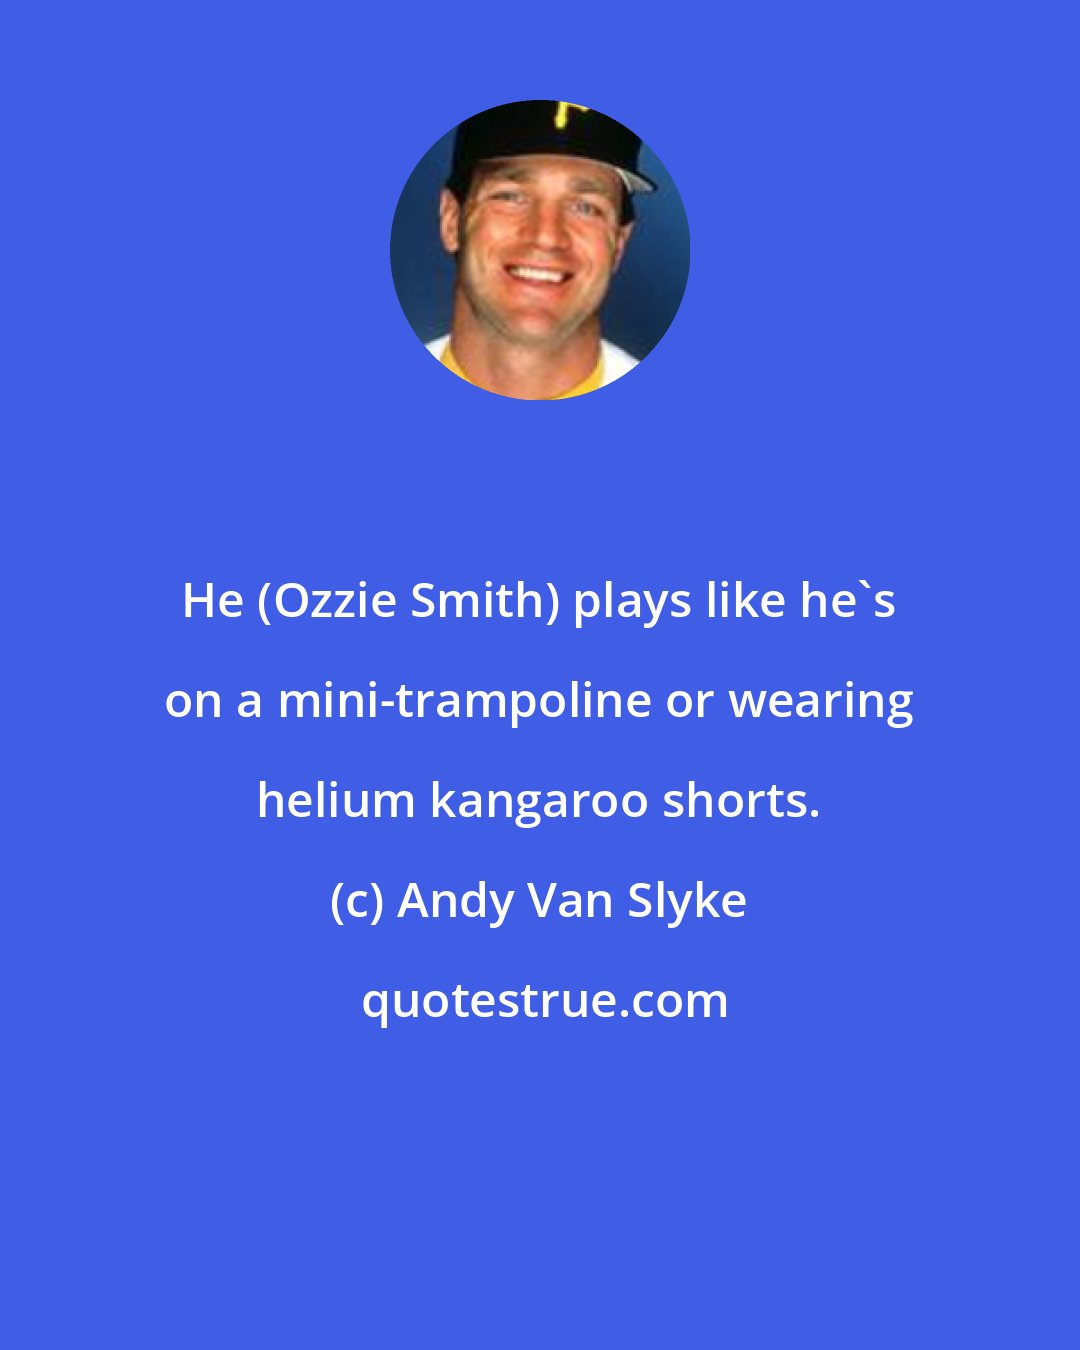 Andy Van Slyke: He (Ozzie Smith) plays like he's on a mini-trampoline or wearing helium kangaroo shorts.